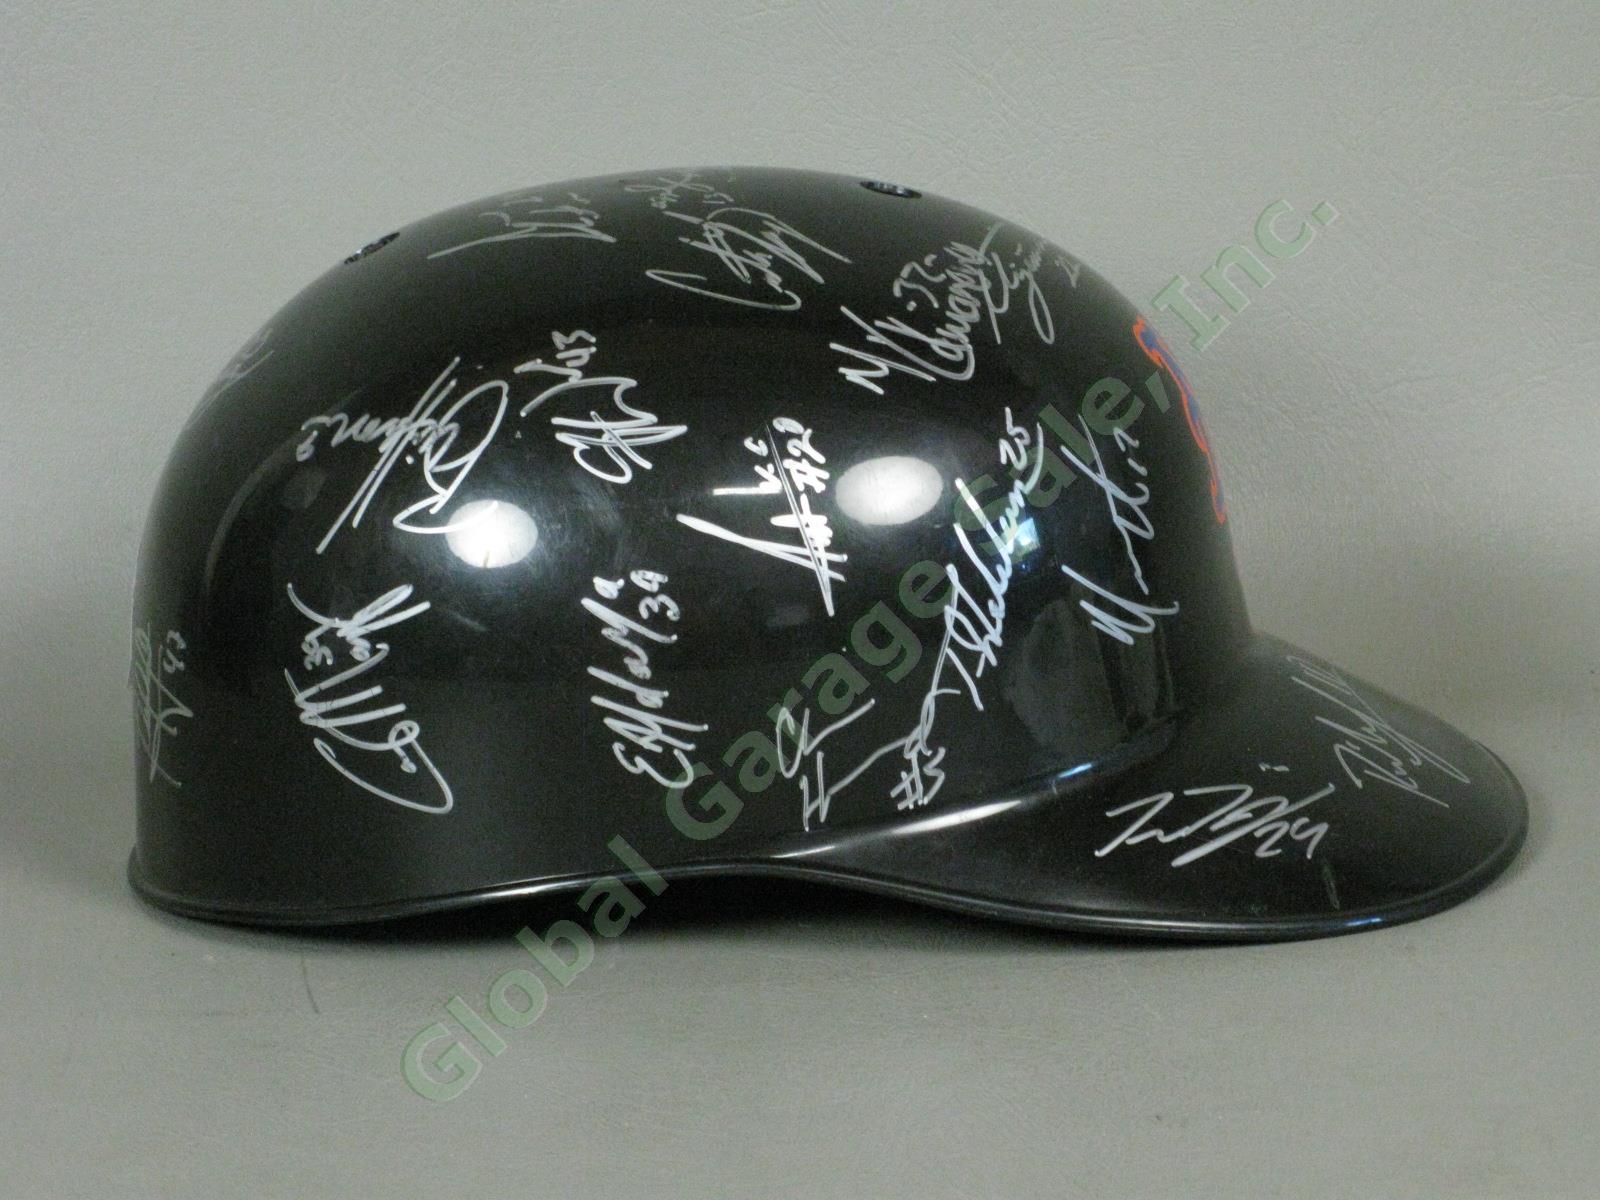 2011 Brooklyn Cyclones Team Signed Baseball Helmet MiLB MLB NYPL New York Mets 1